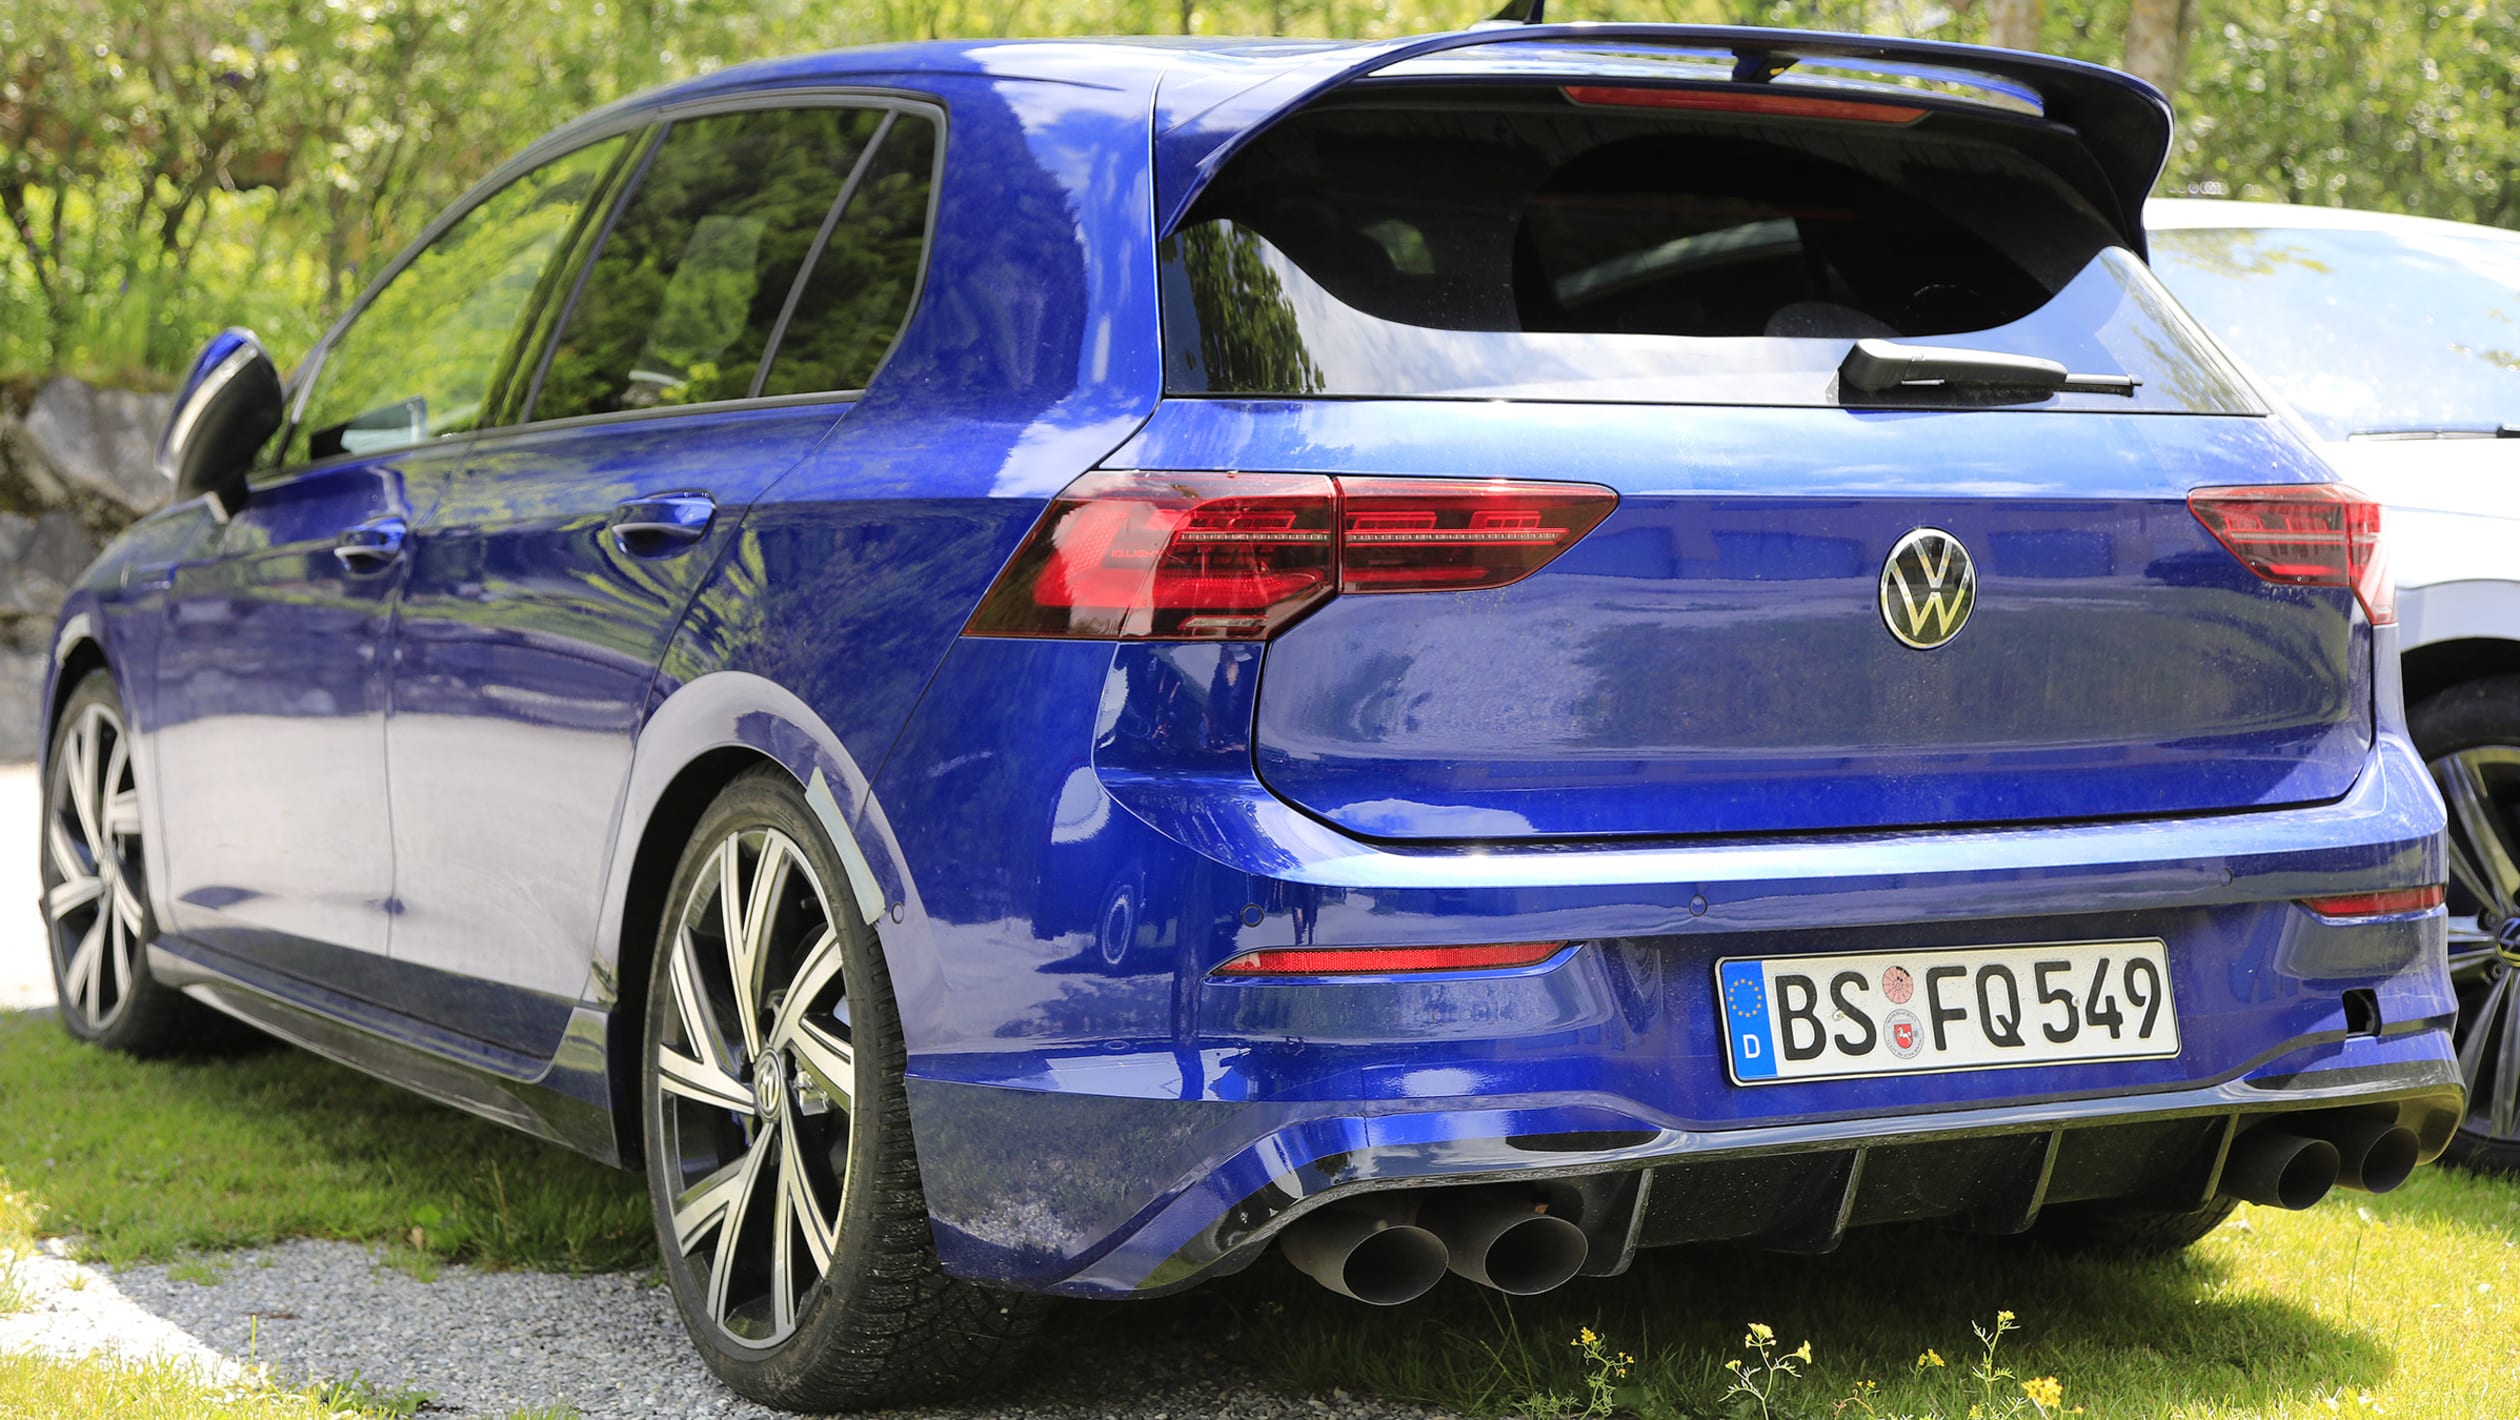 Volkswagen%20Golf%20R%20spyshots-5.jpg